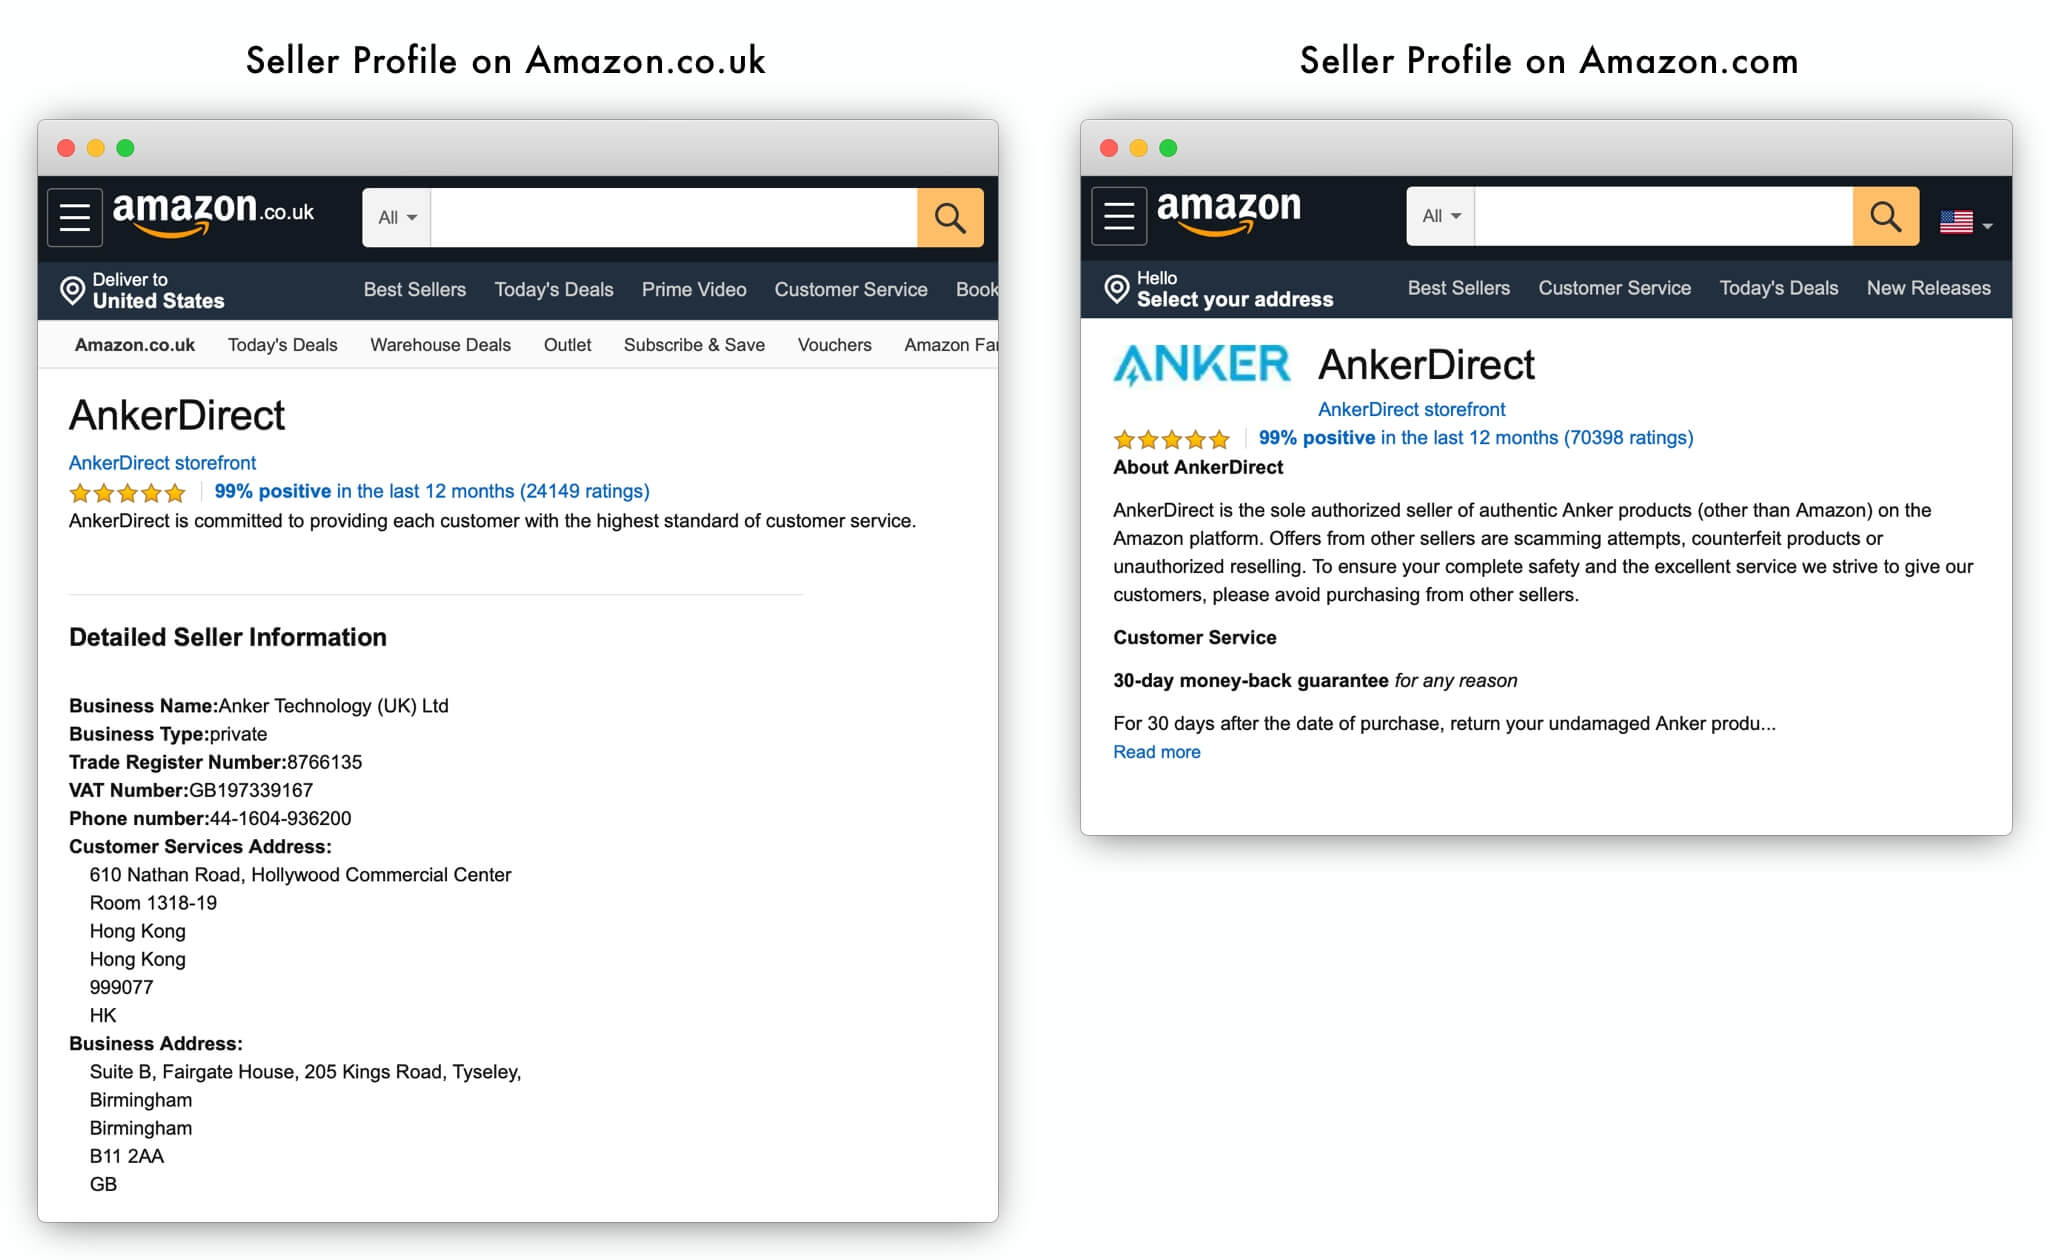 Amazon Seller Profile USA vs UK